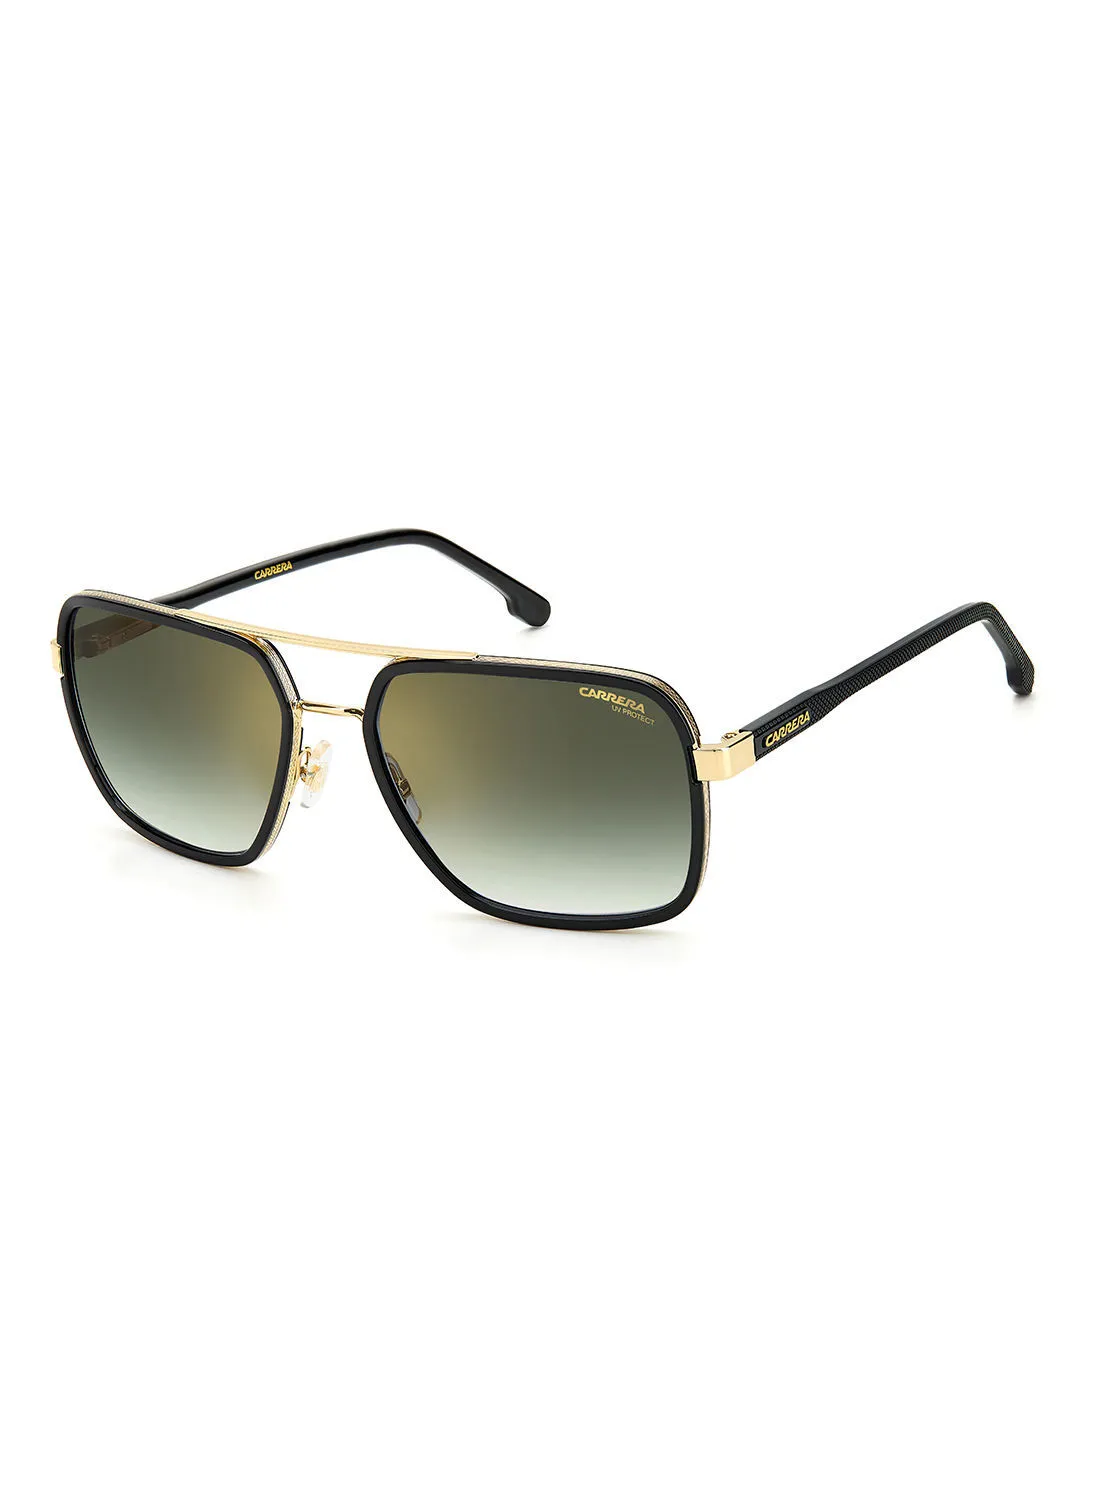 CARRERA UV Protection Rectangular Eyewear Sunglasses CARRERA 256/S   GOLD BLCK 58